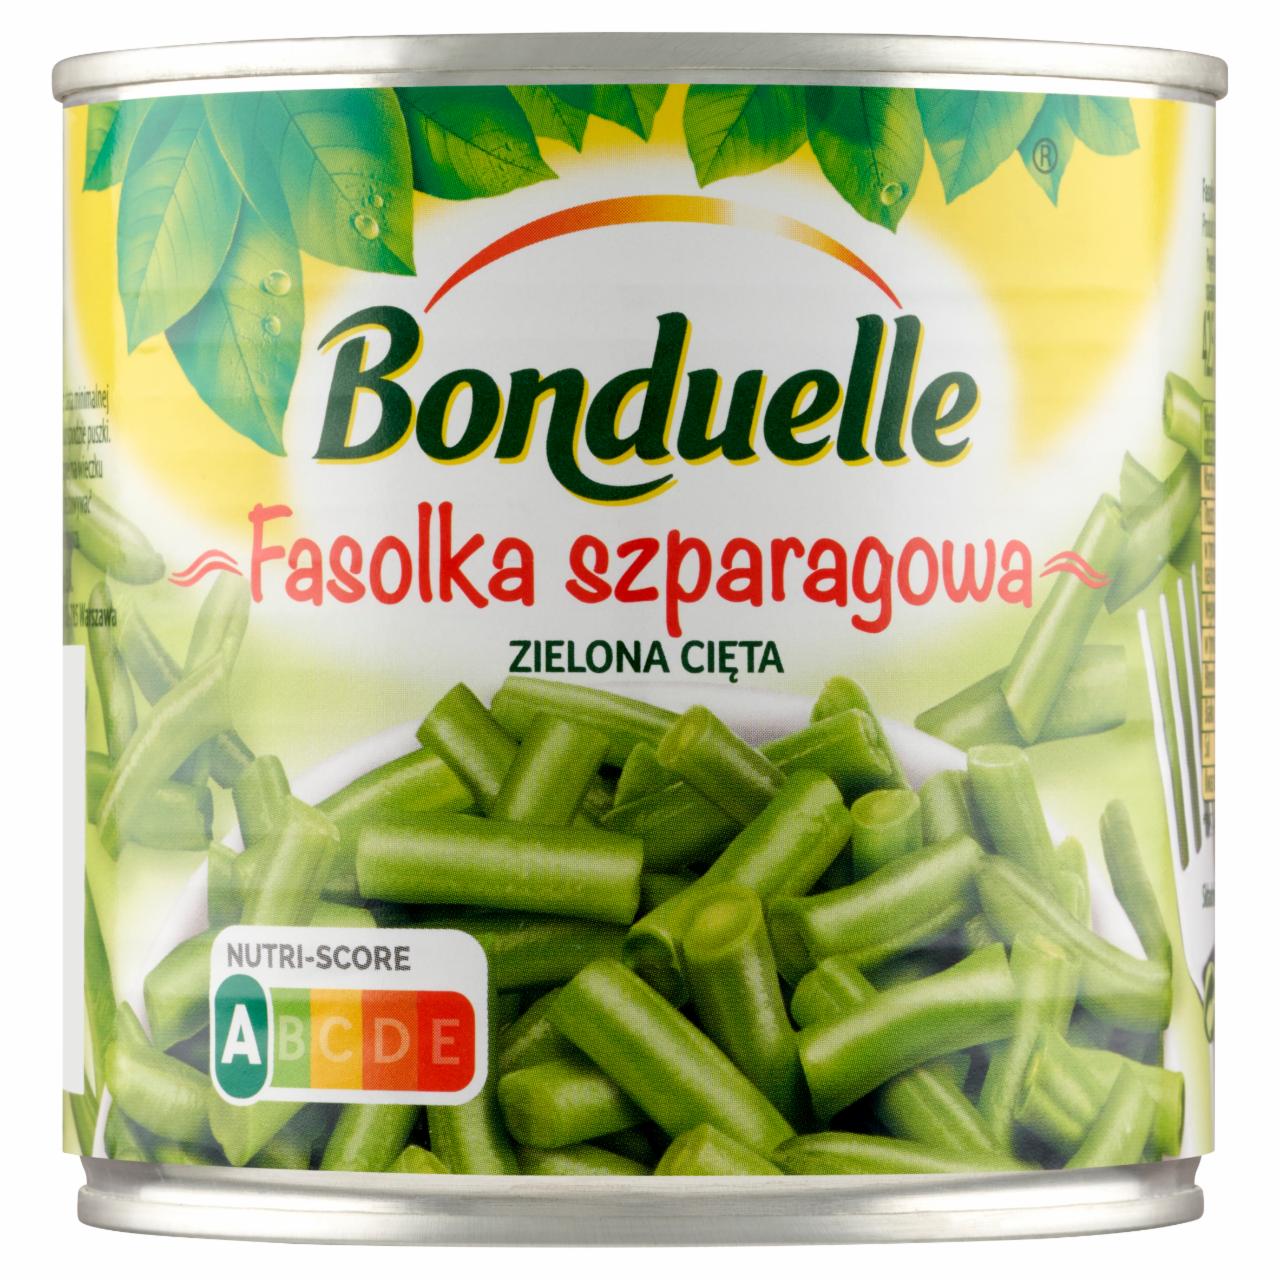 Zdjęcia - Bonduelle Fasolka szparagowa zielona cięta 400 g